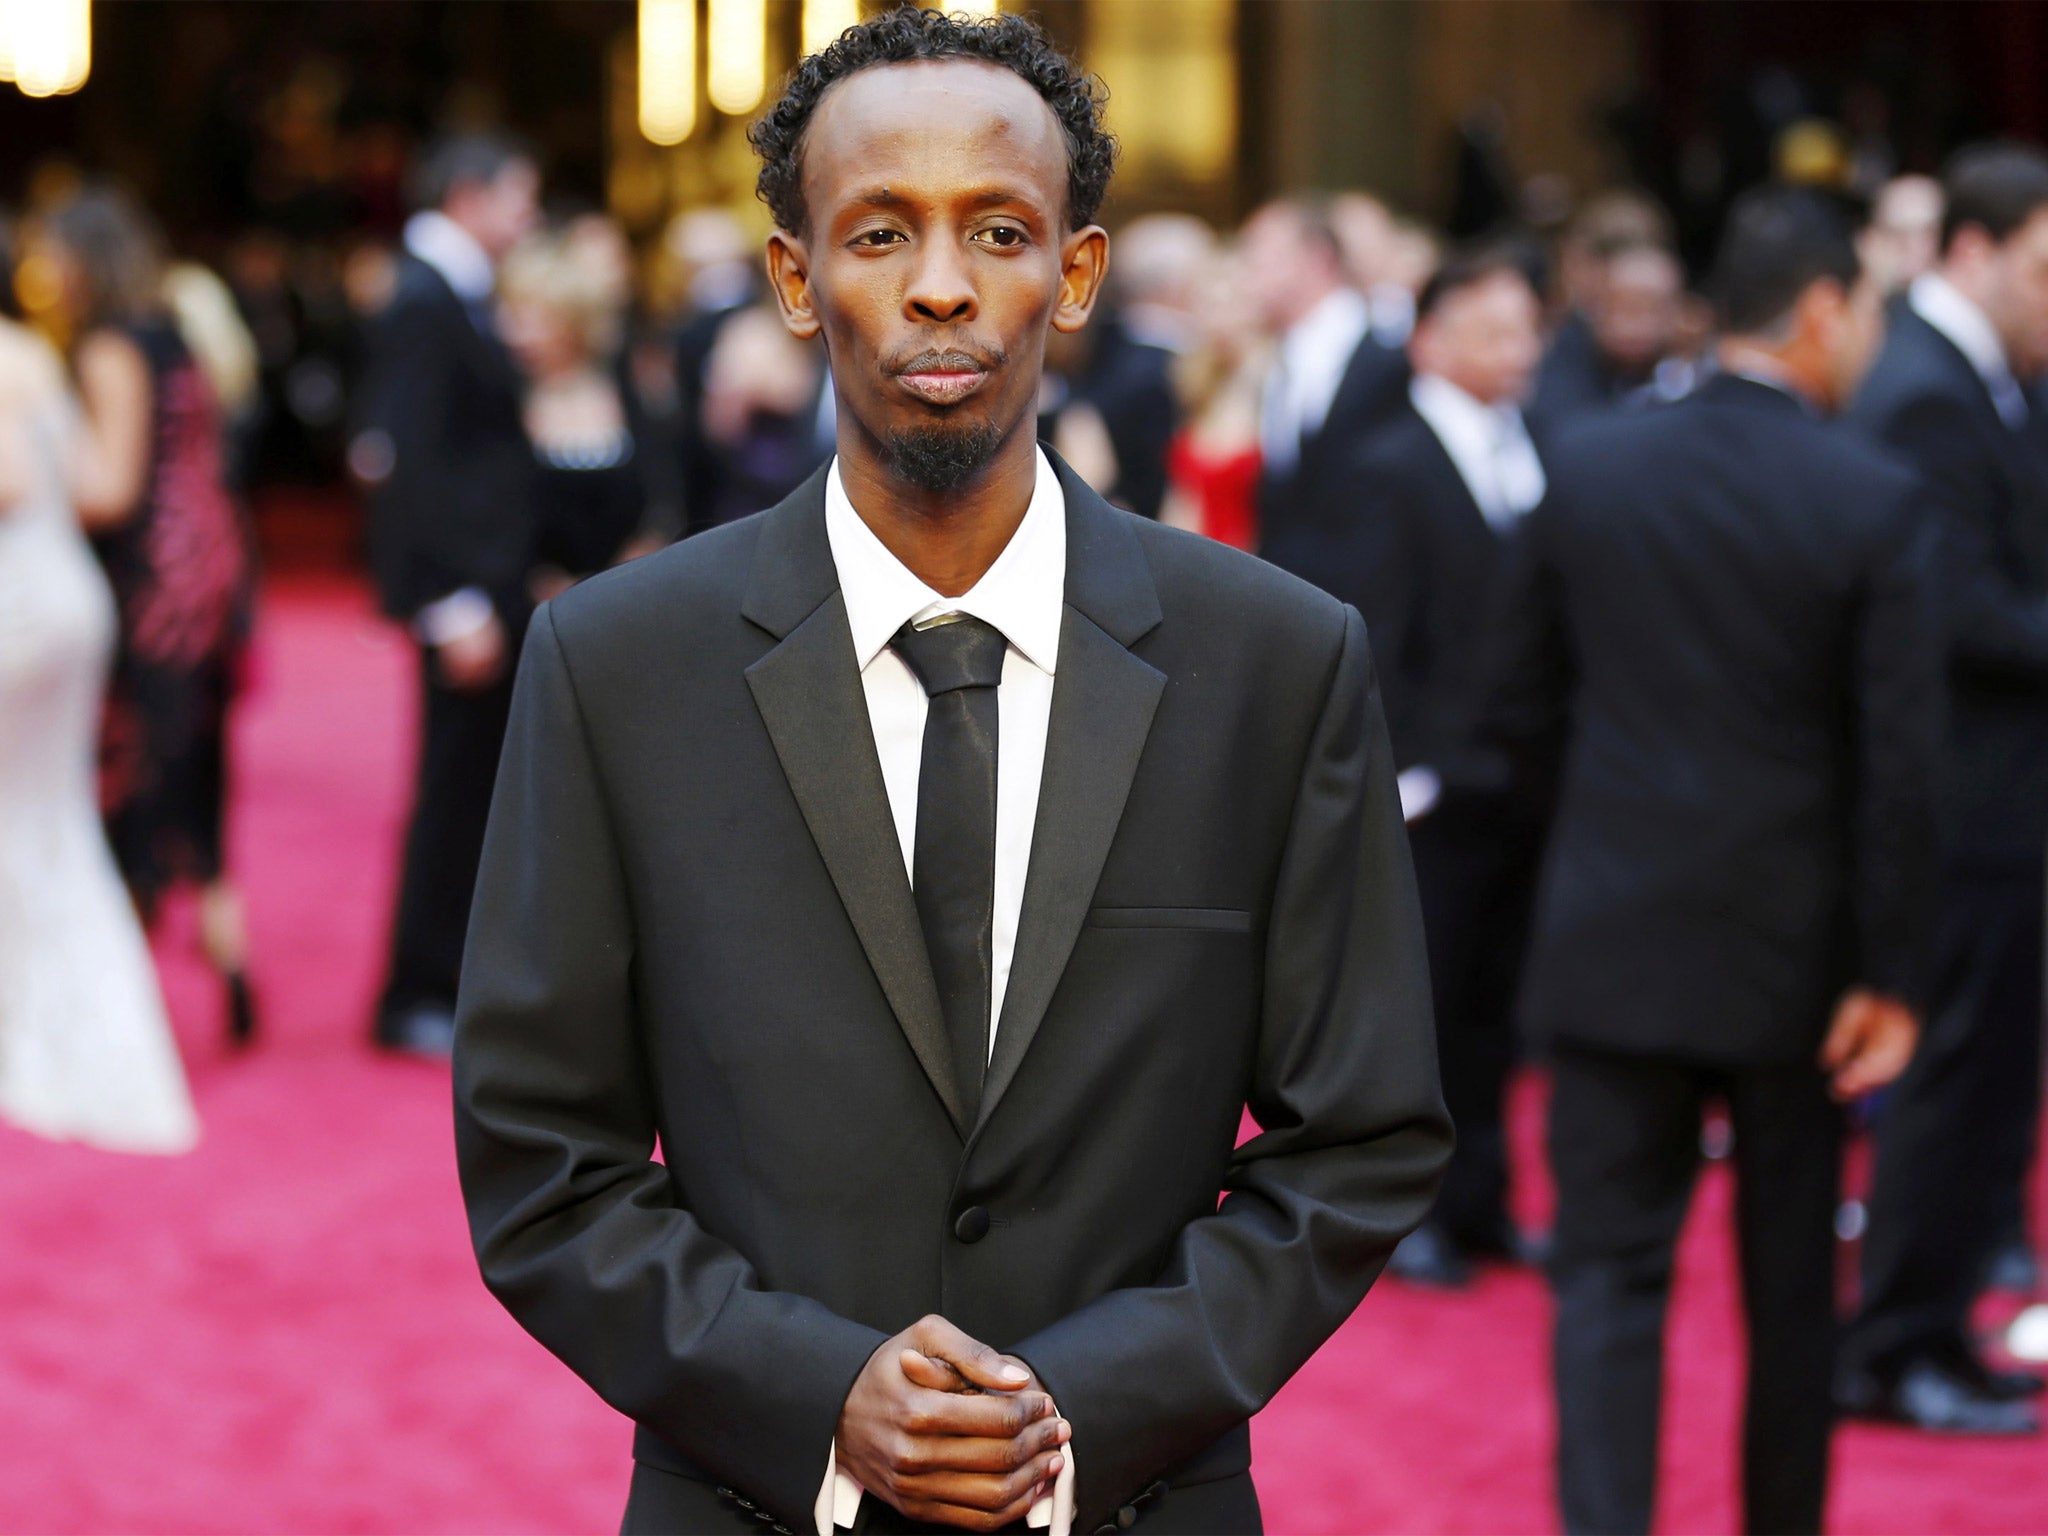 Barkhad Abdi arriving at Sunday's Oscars ceremony